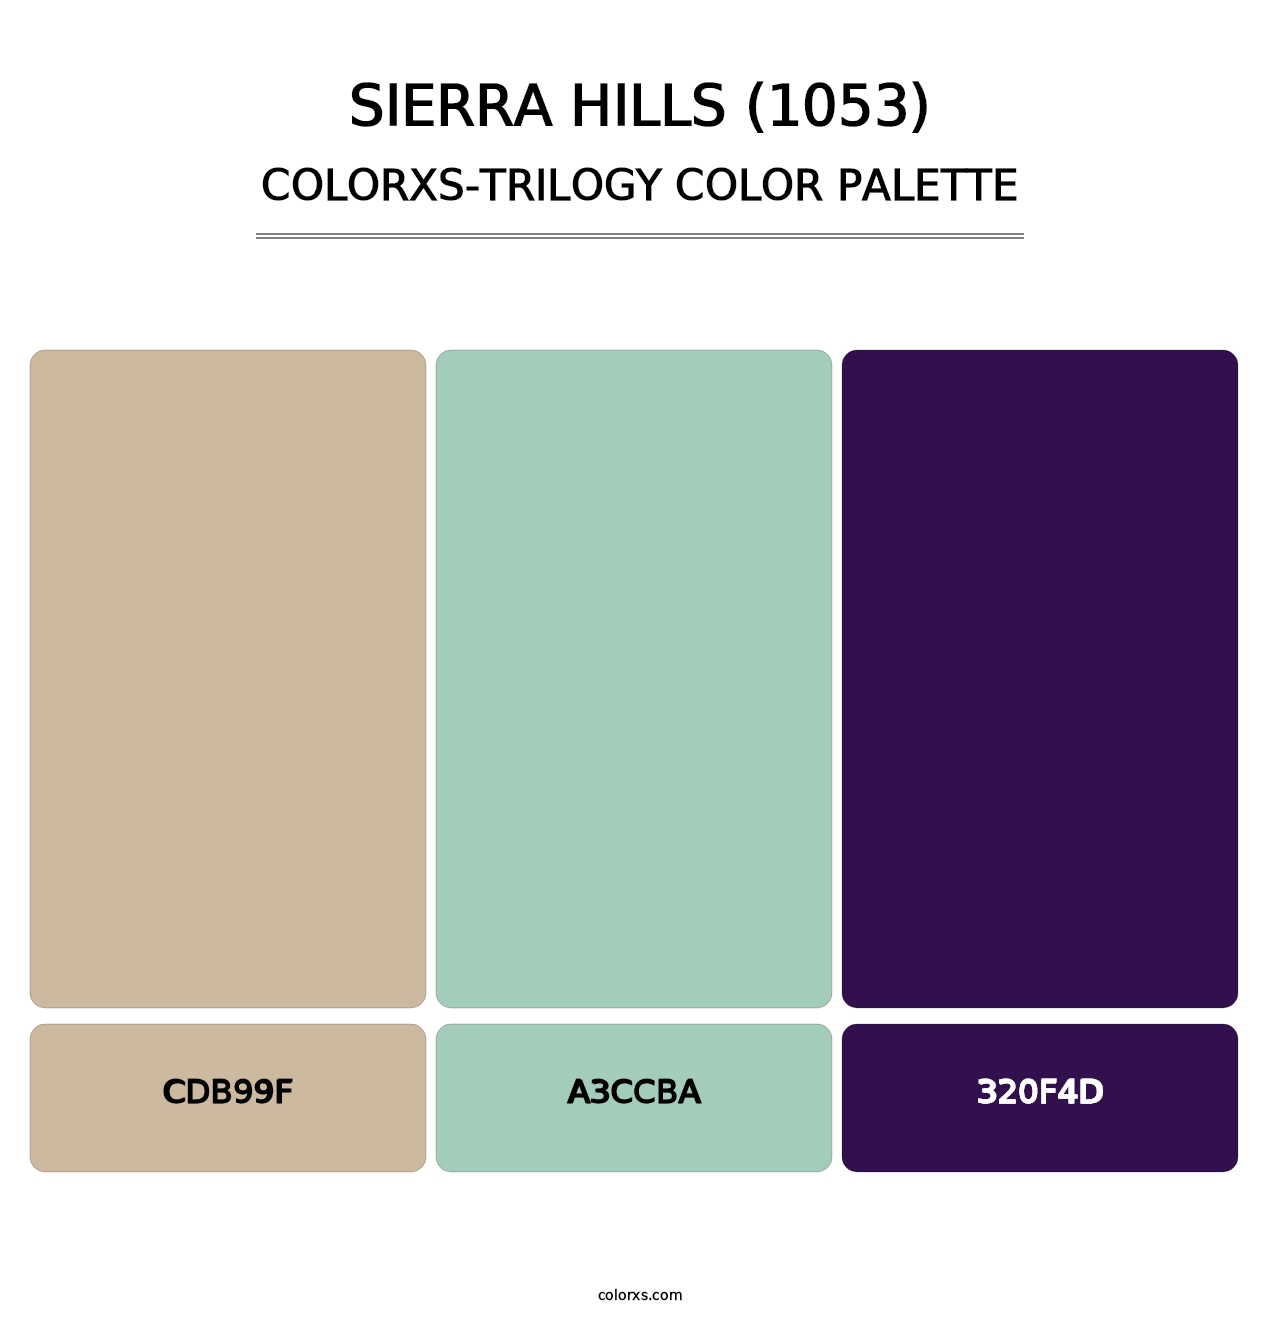 Sierra Hills (1053) - Colorxs Trilogy Palette